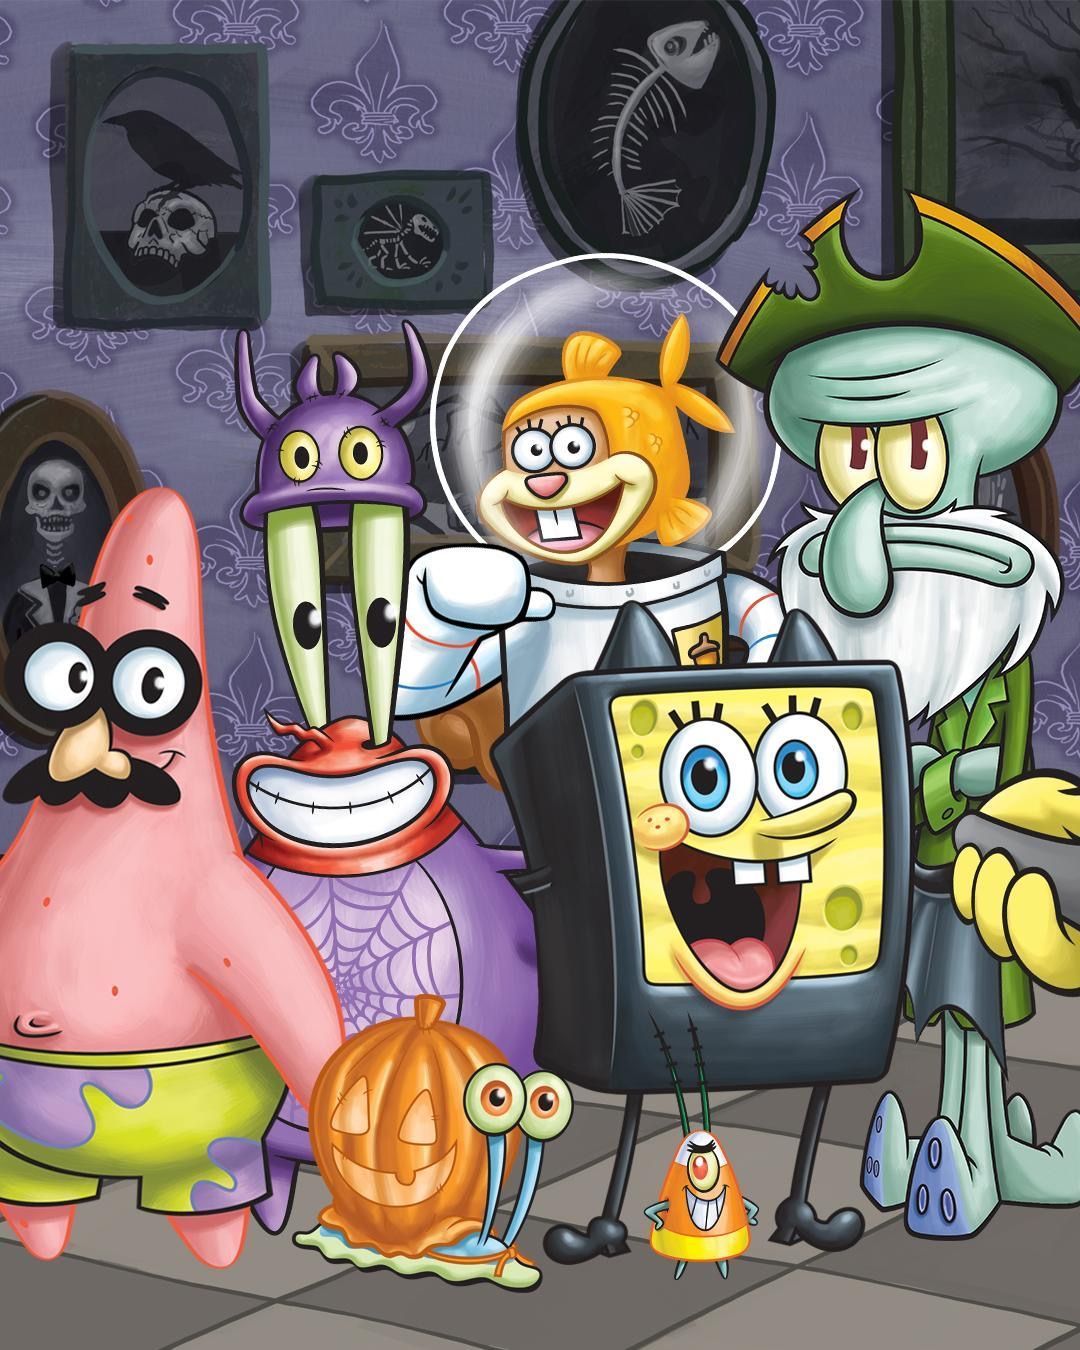 Pin on The SpongeBob Movie: Sponge on the Run Full Movie